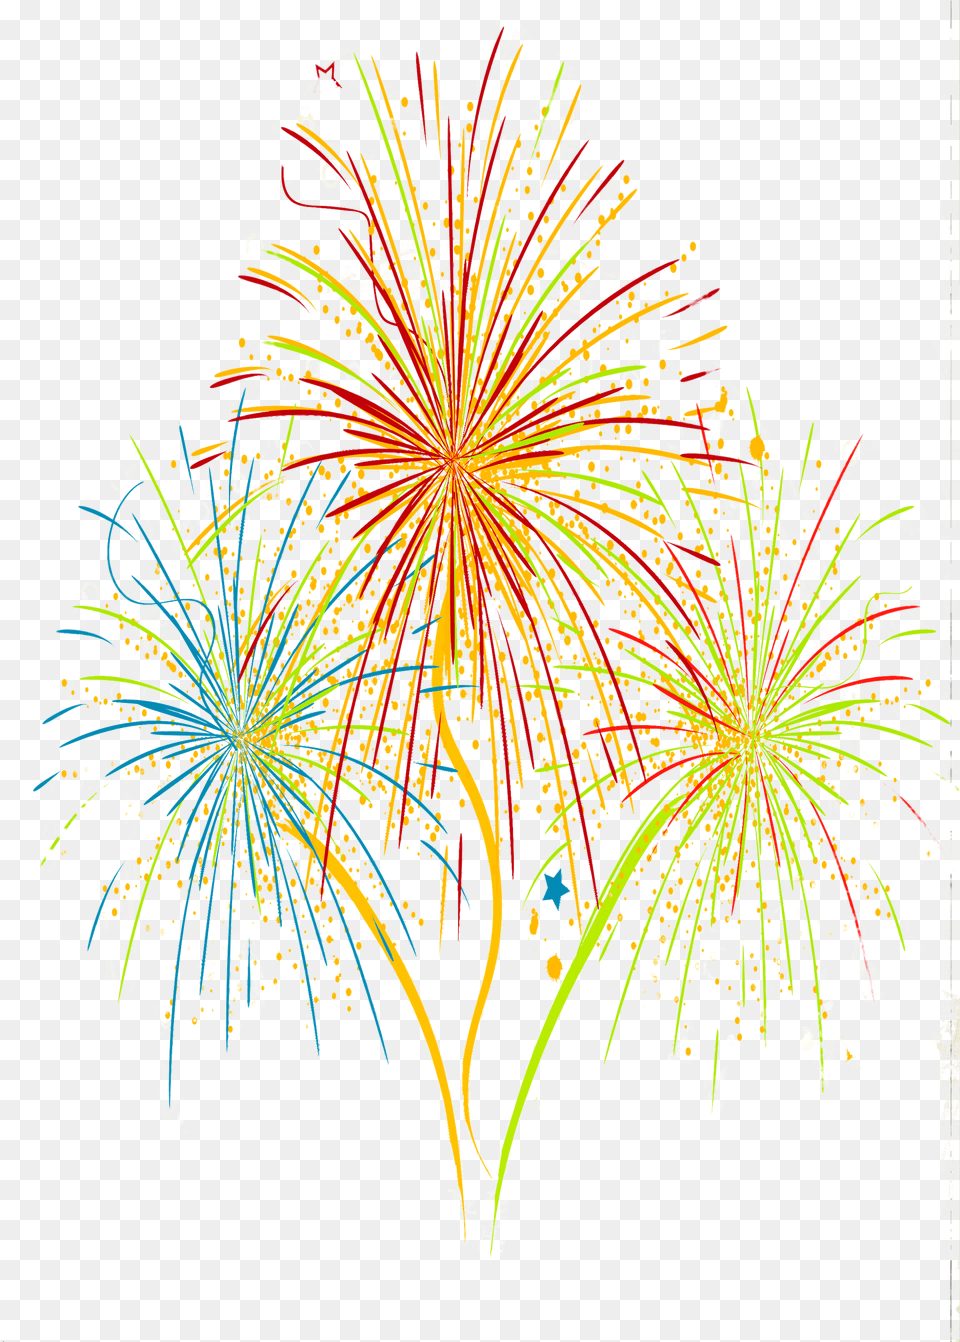 Independence Weekend Celebration And Fireworks Display Fogos De Artificio Vetor, Plant, Pattern Png Image